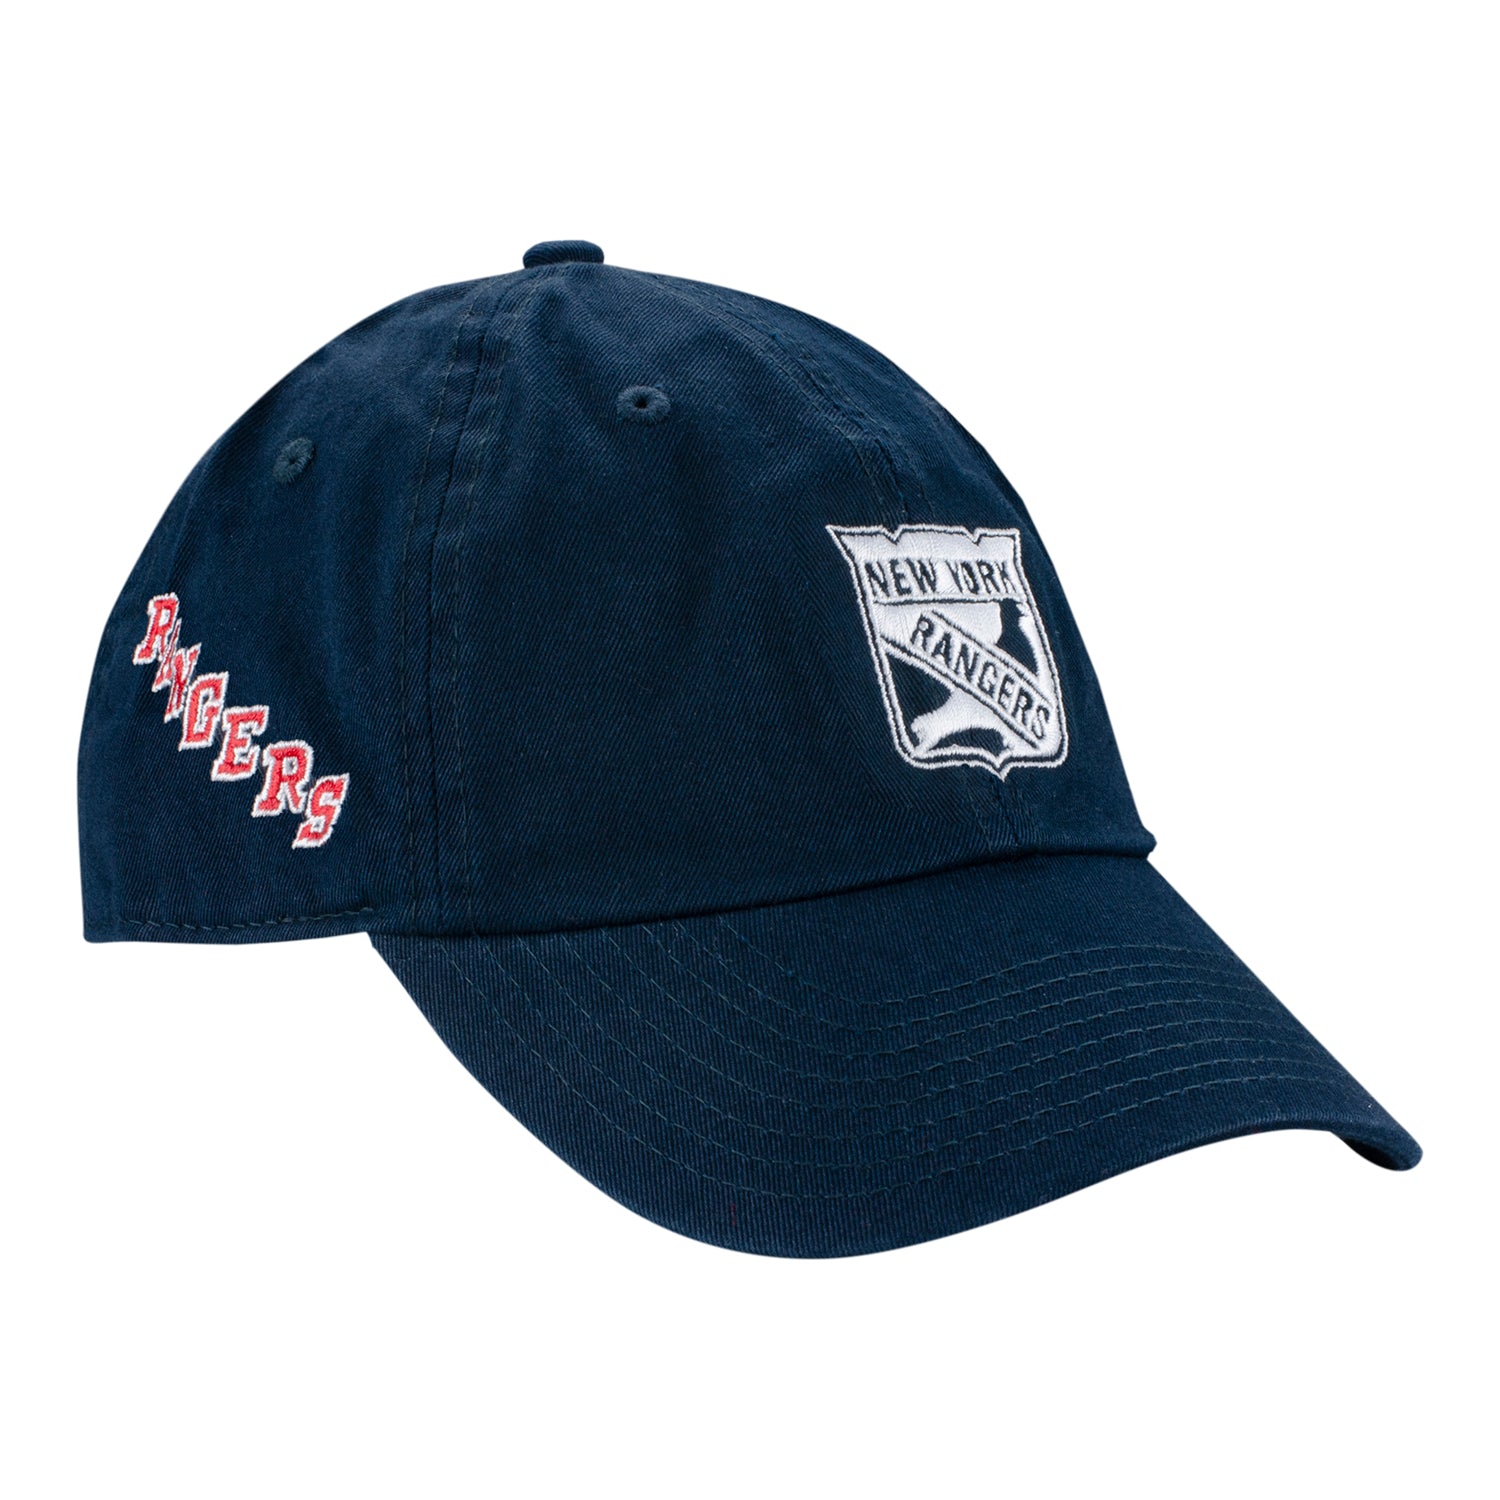 47 Brand Rangers Exclusive Staple Navy Clean Up Hat